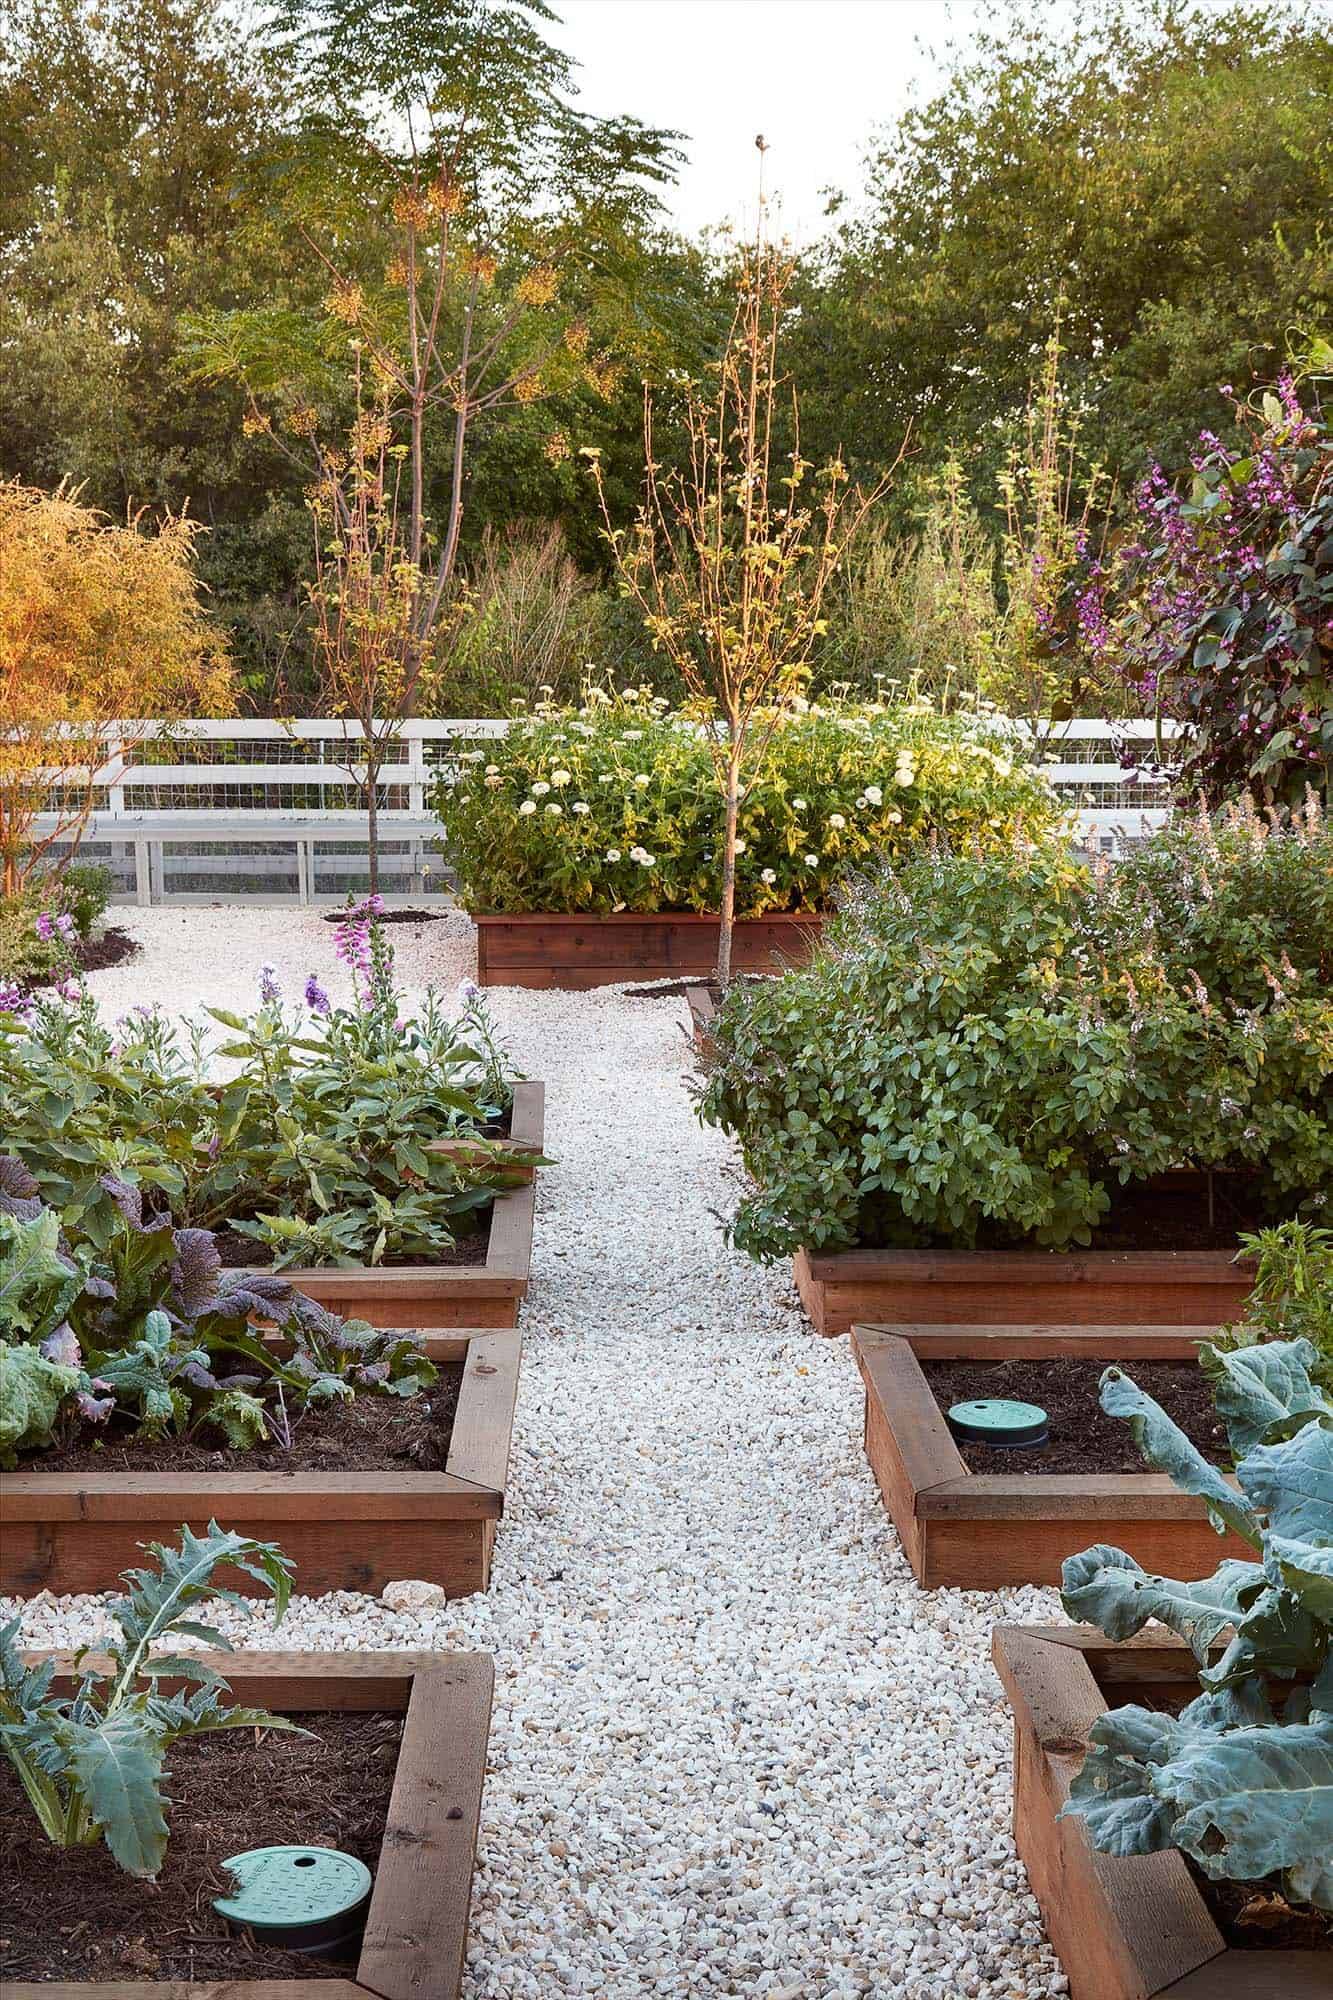 Your Very Own Vegetable Garden